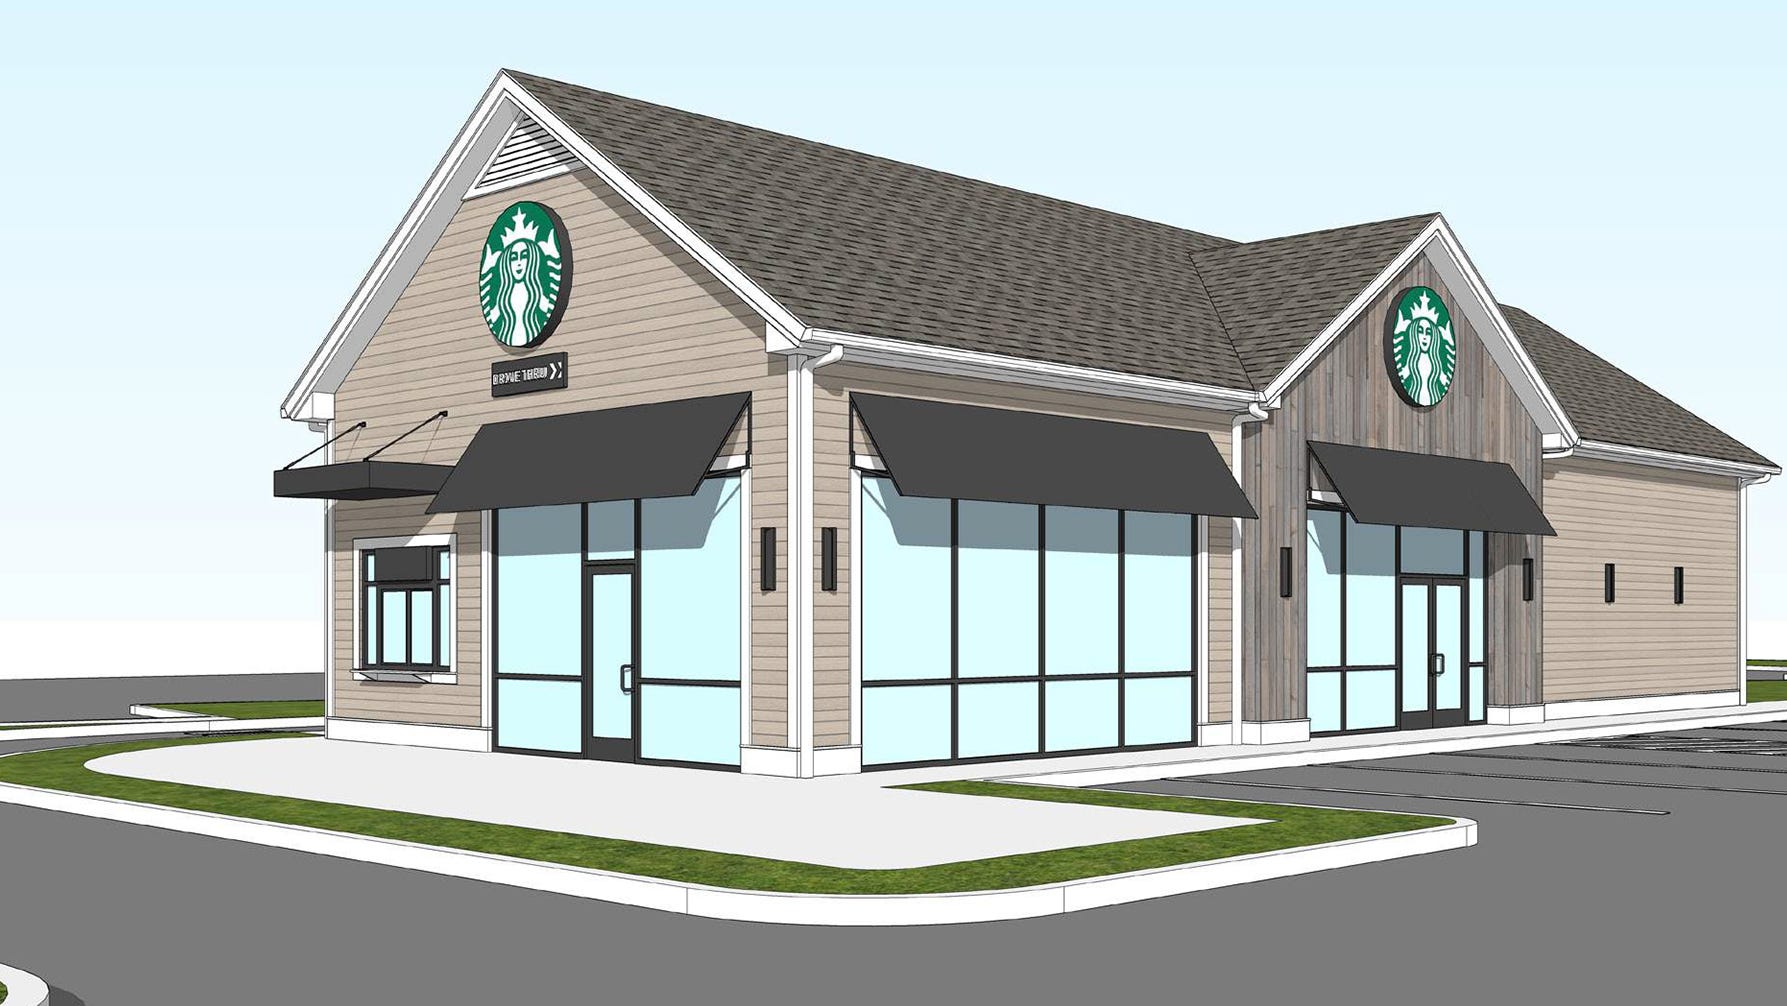 Middletown RI: Benny's, mini-golf, Starbucks get Planning Board votes